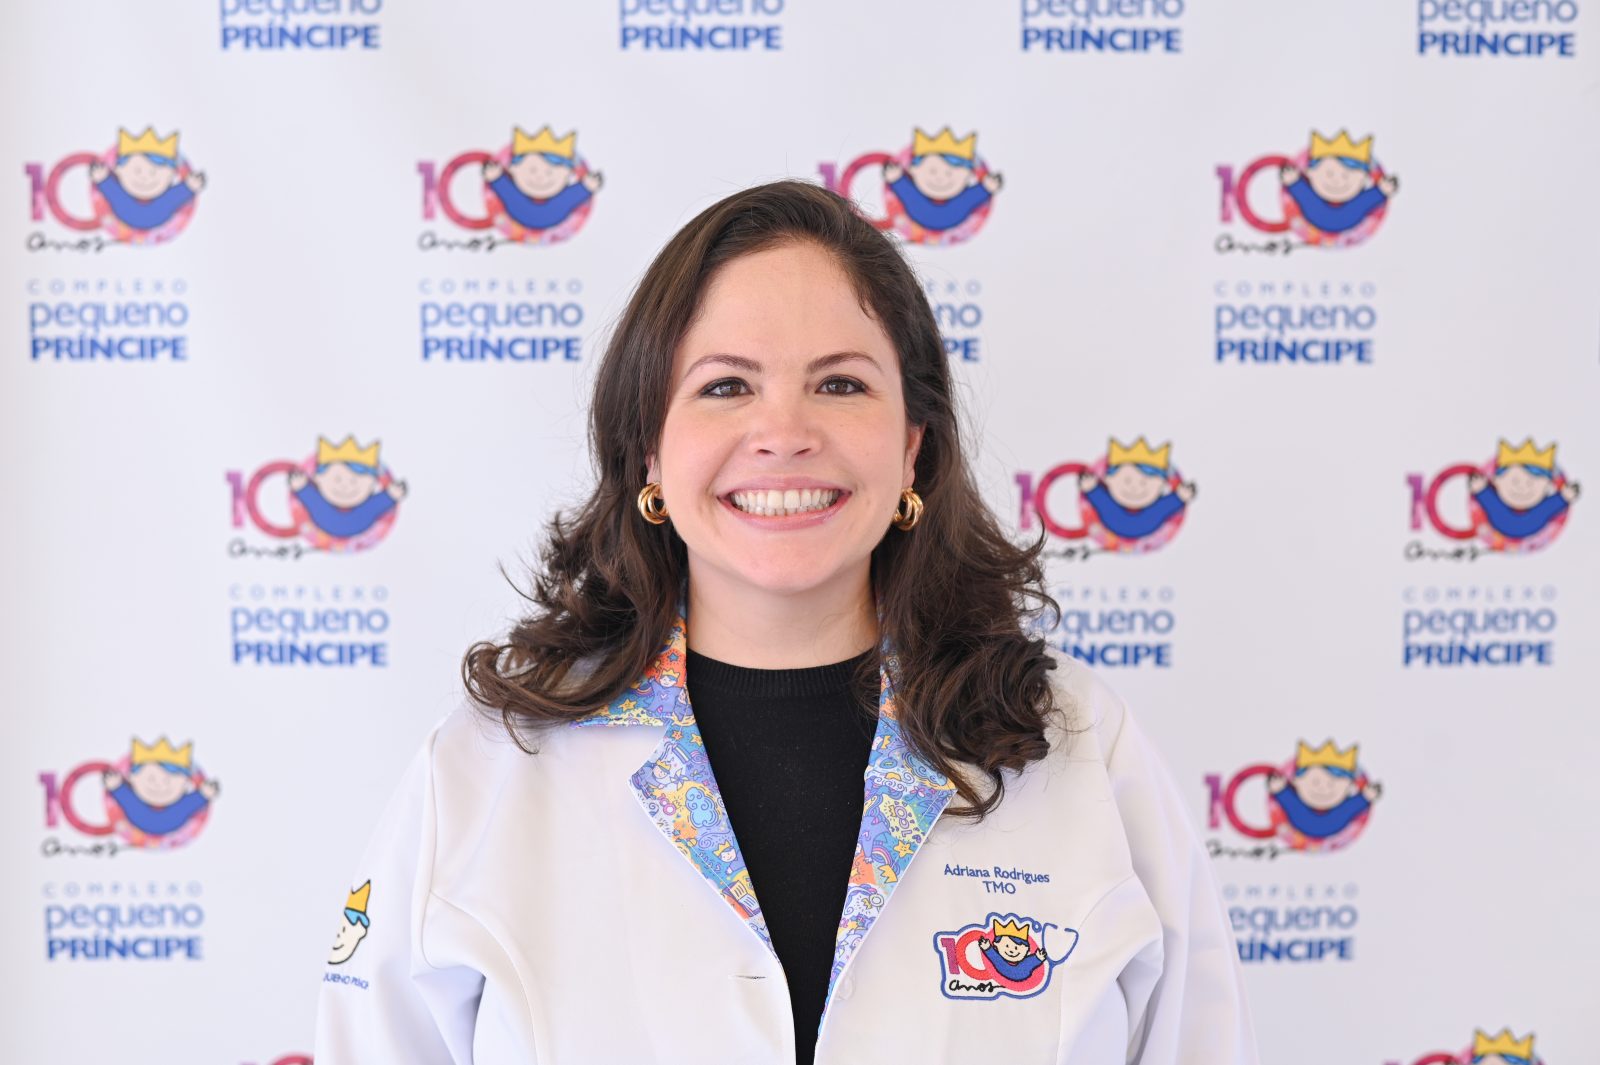 Dra. Adriana Mello Rodrigues